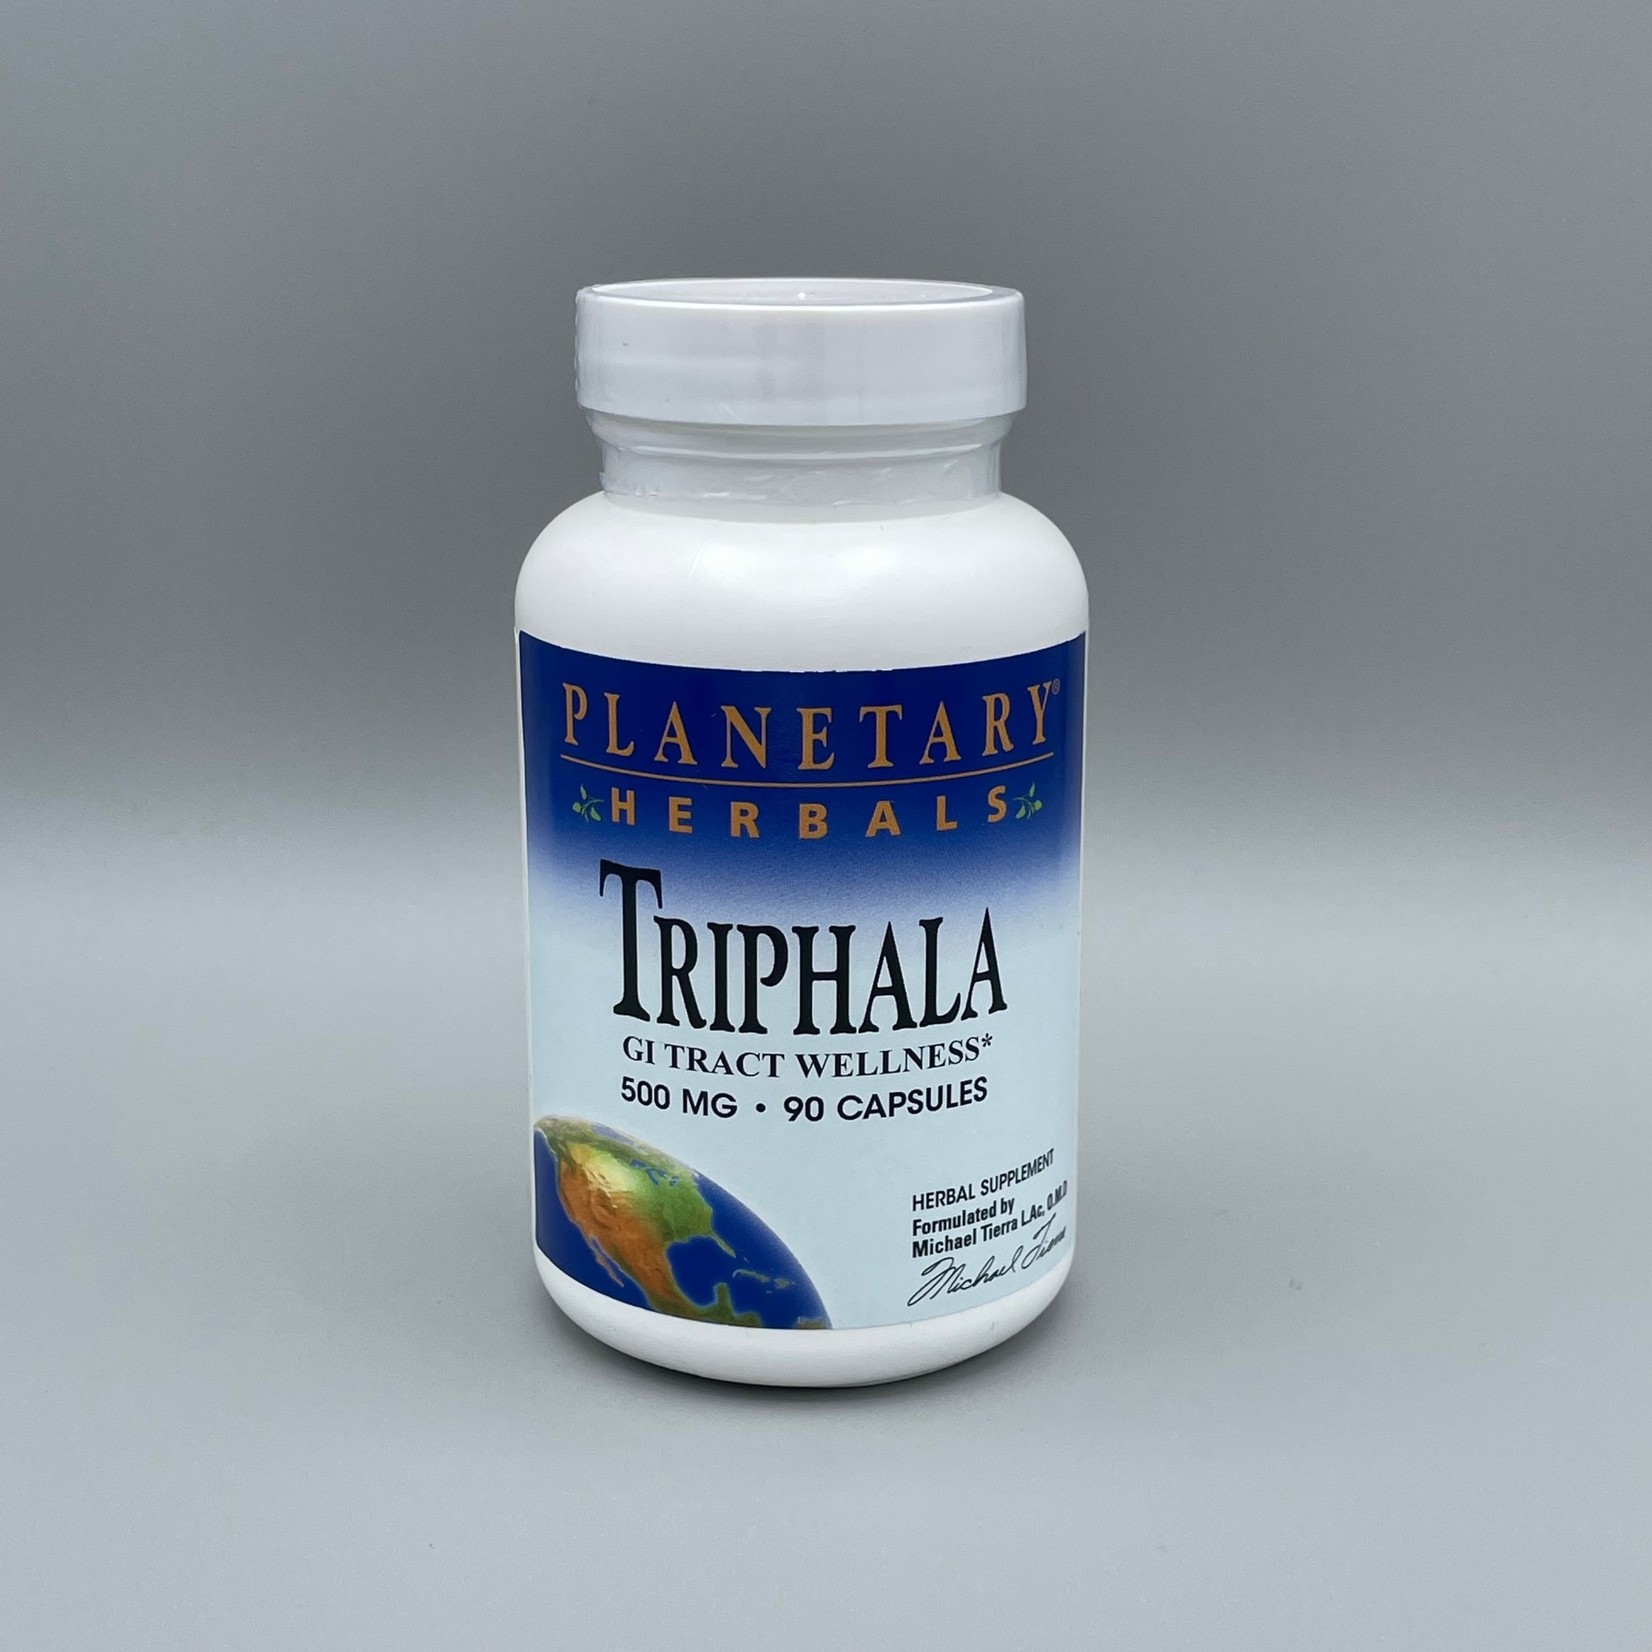 Planetary Herbals Triphala (GI Tract Wellness) - 500 mg, 90 Capsules